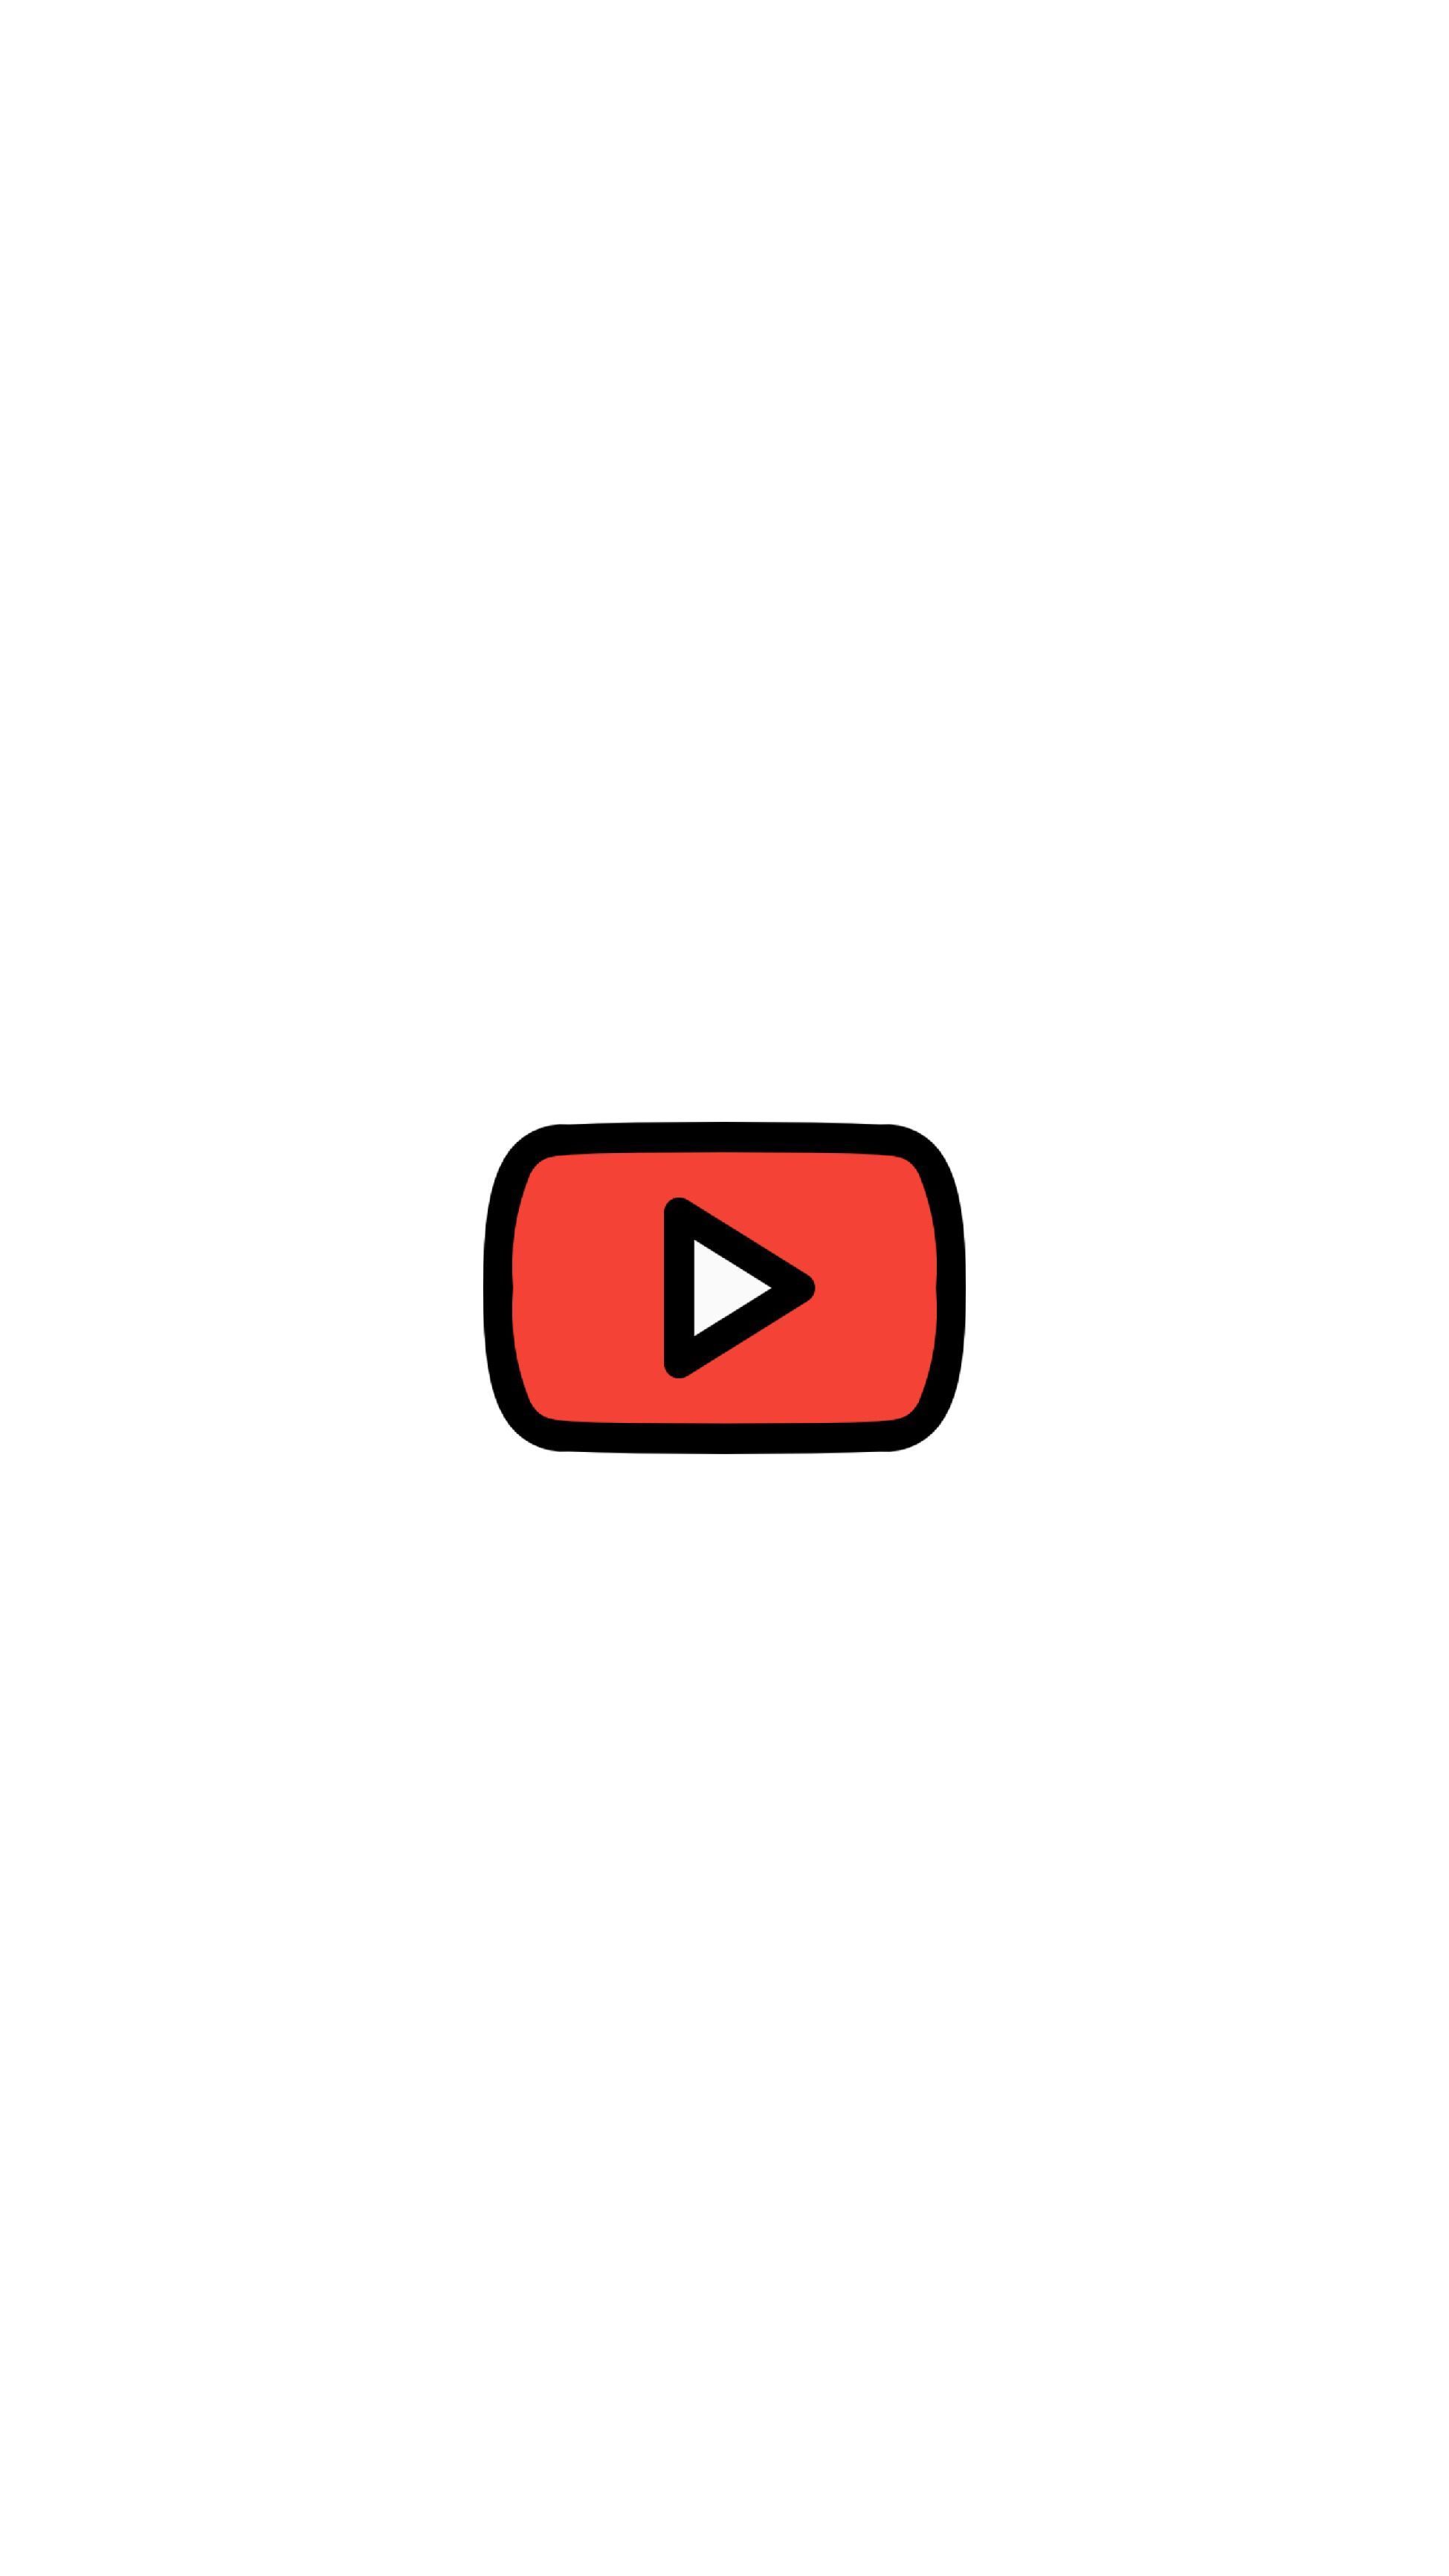 Youtube Logo ` Youtube. Youtube logo, Instagram logo, Instagram icons